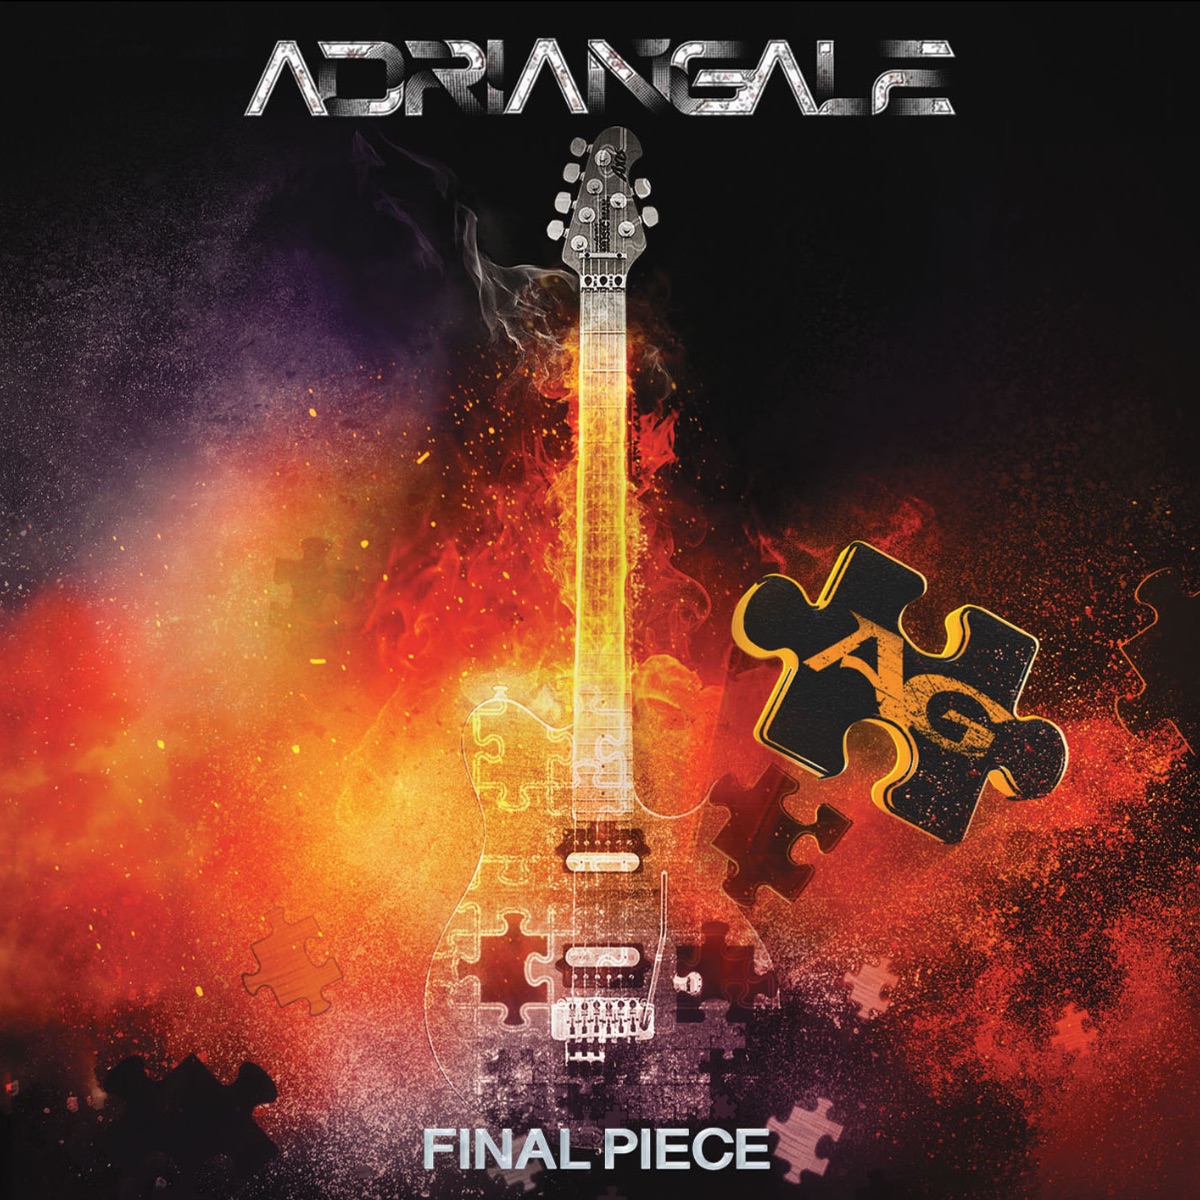 Adriangale - Final Piece